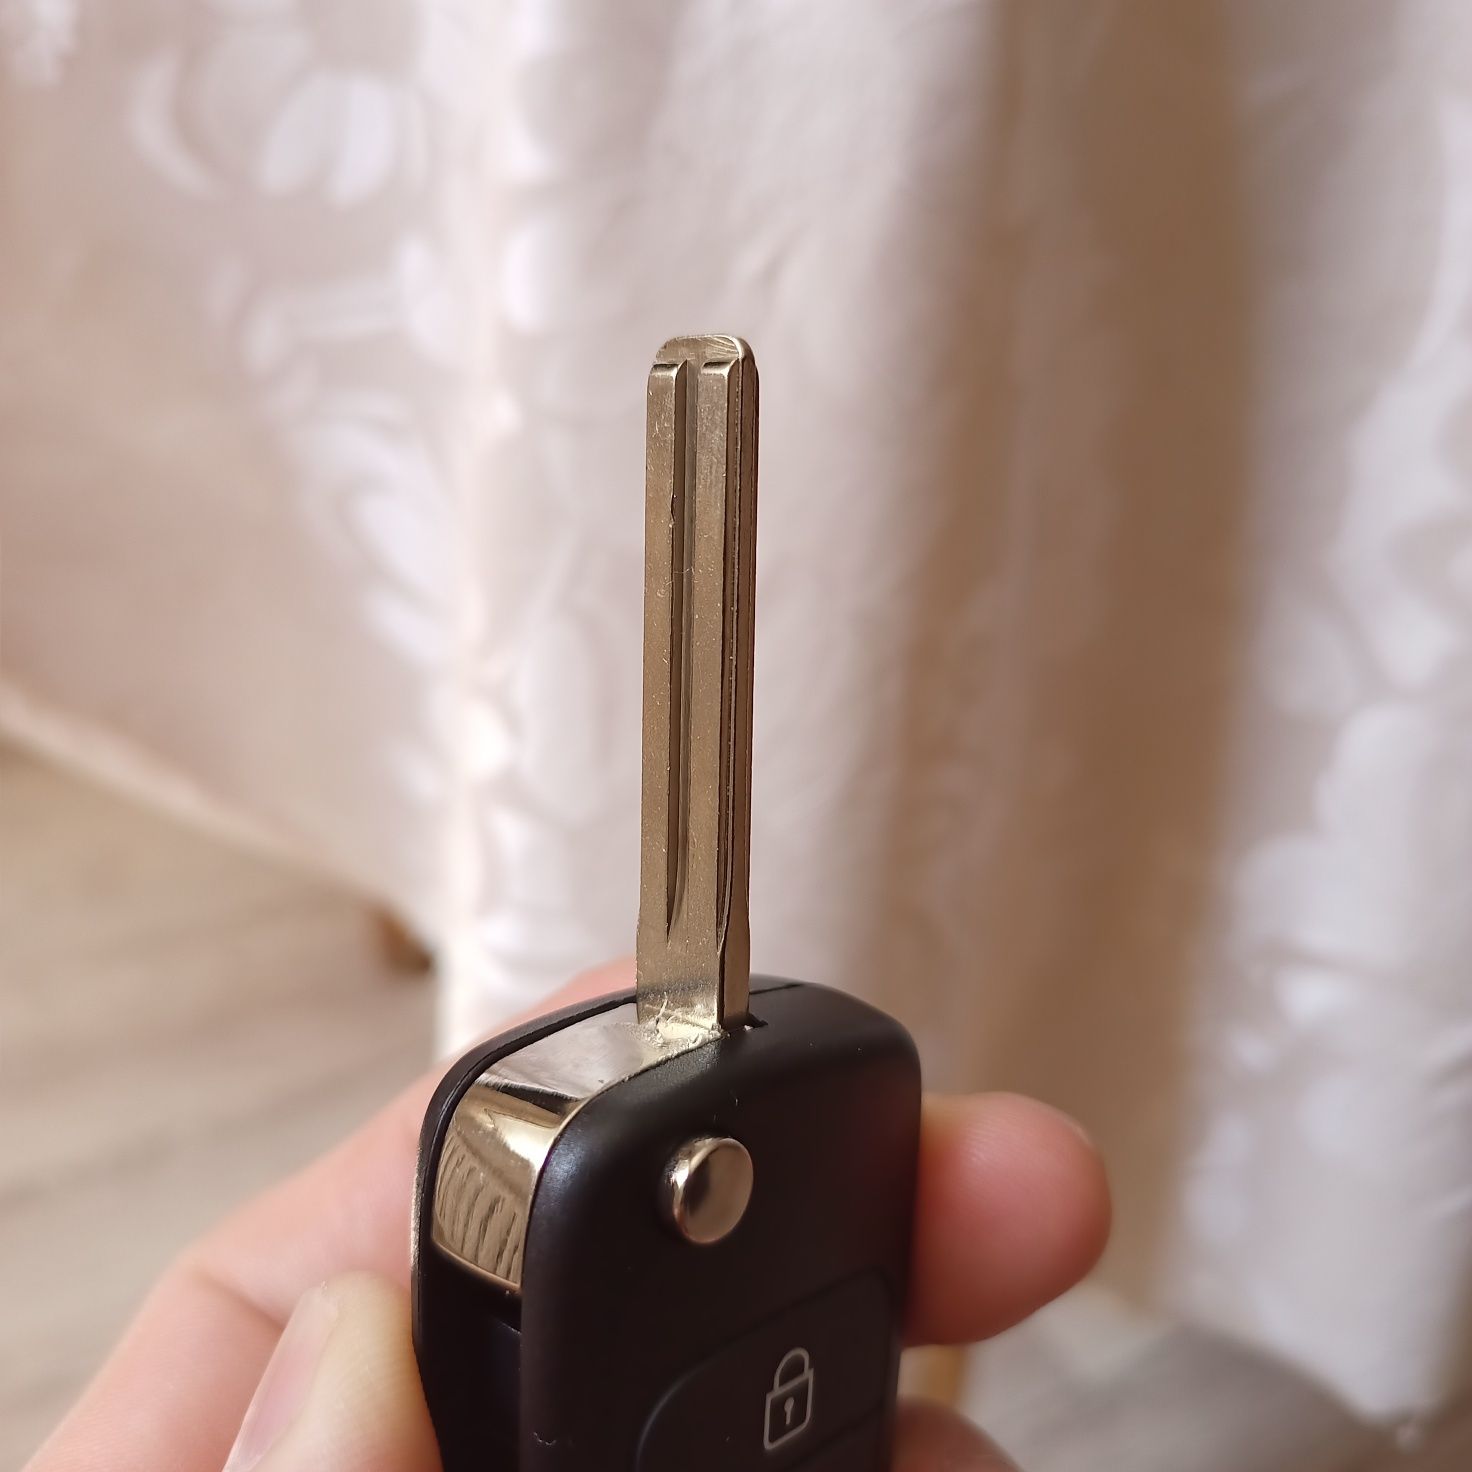 Ключи Kia Rio, корпус брелка, отличное качество.